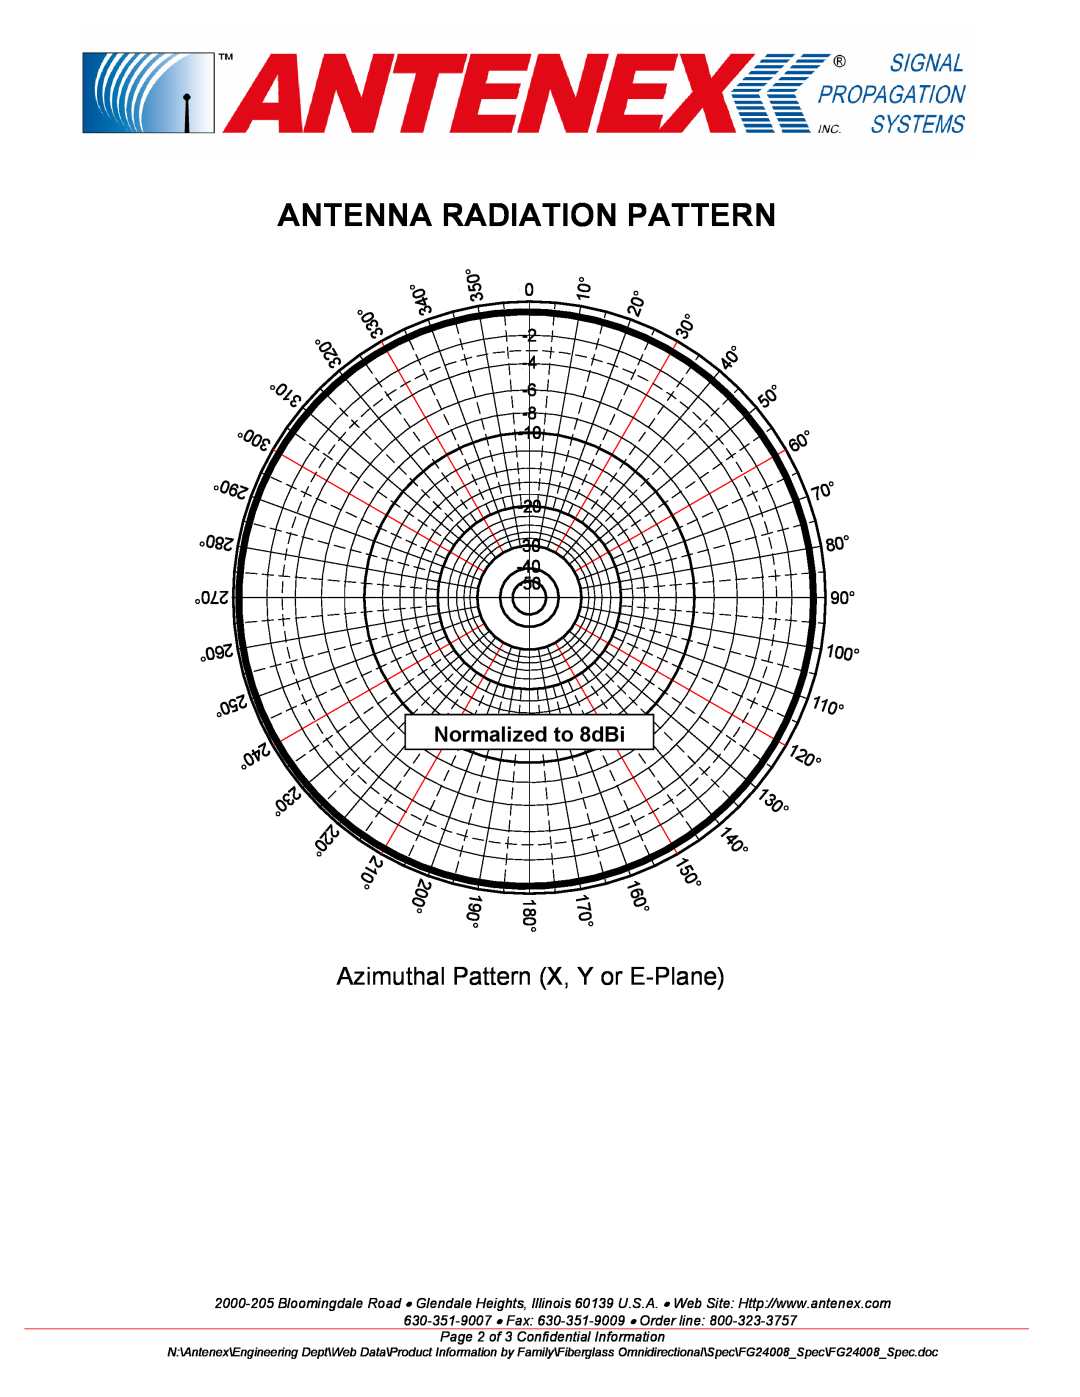 B&B Electronics FG24008 specifications Antenna Radiation Pattern, Azimuthal Pattern X, Y or E-Plane 